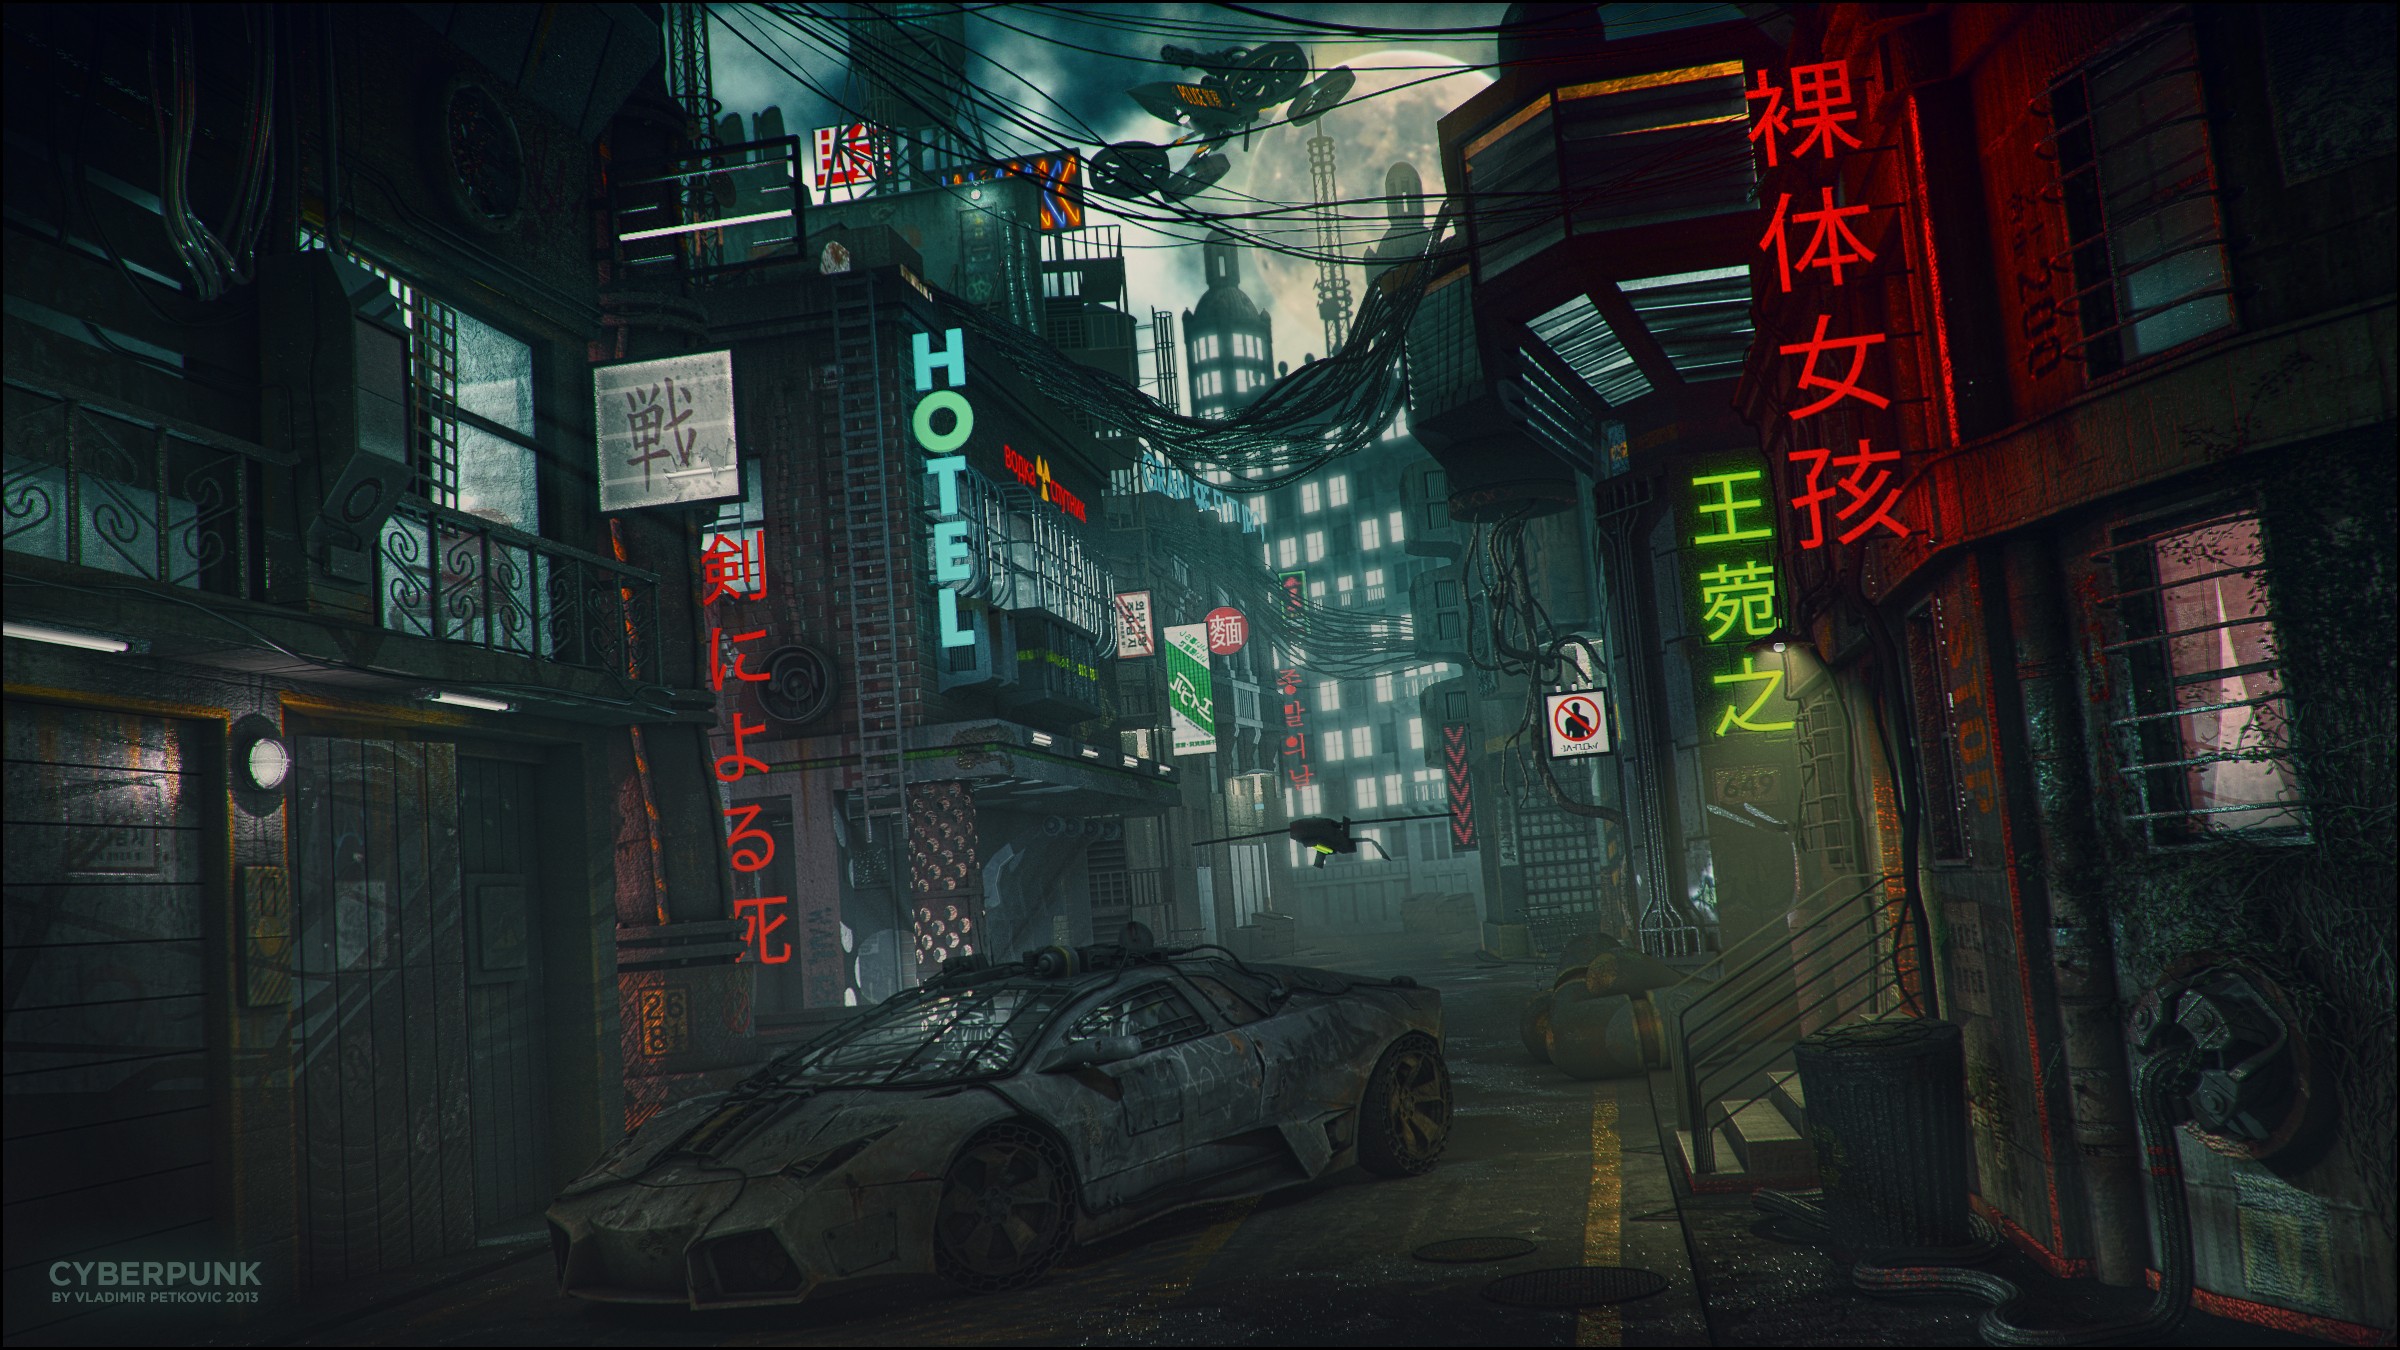 General 2400x1350 neon science fiction car vehicle cyberpunk DeviantArt artwork futuristic city